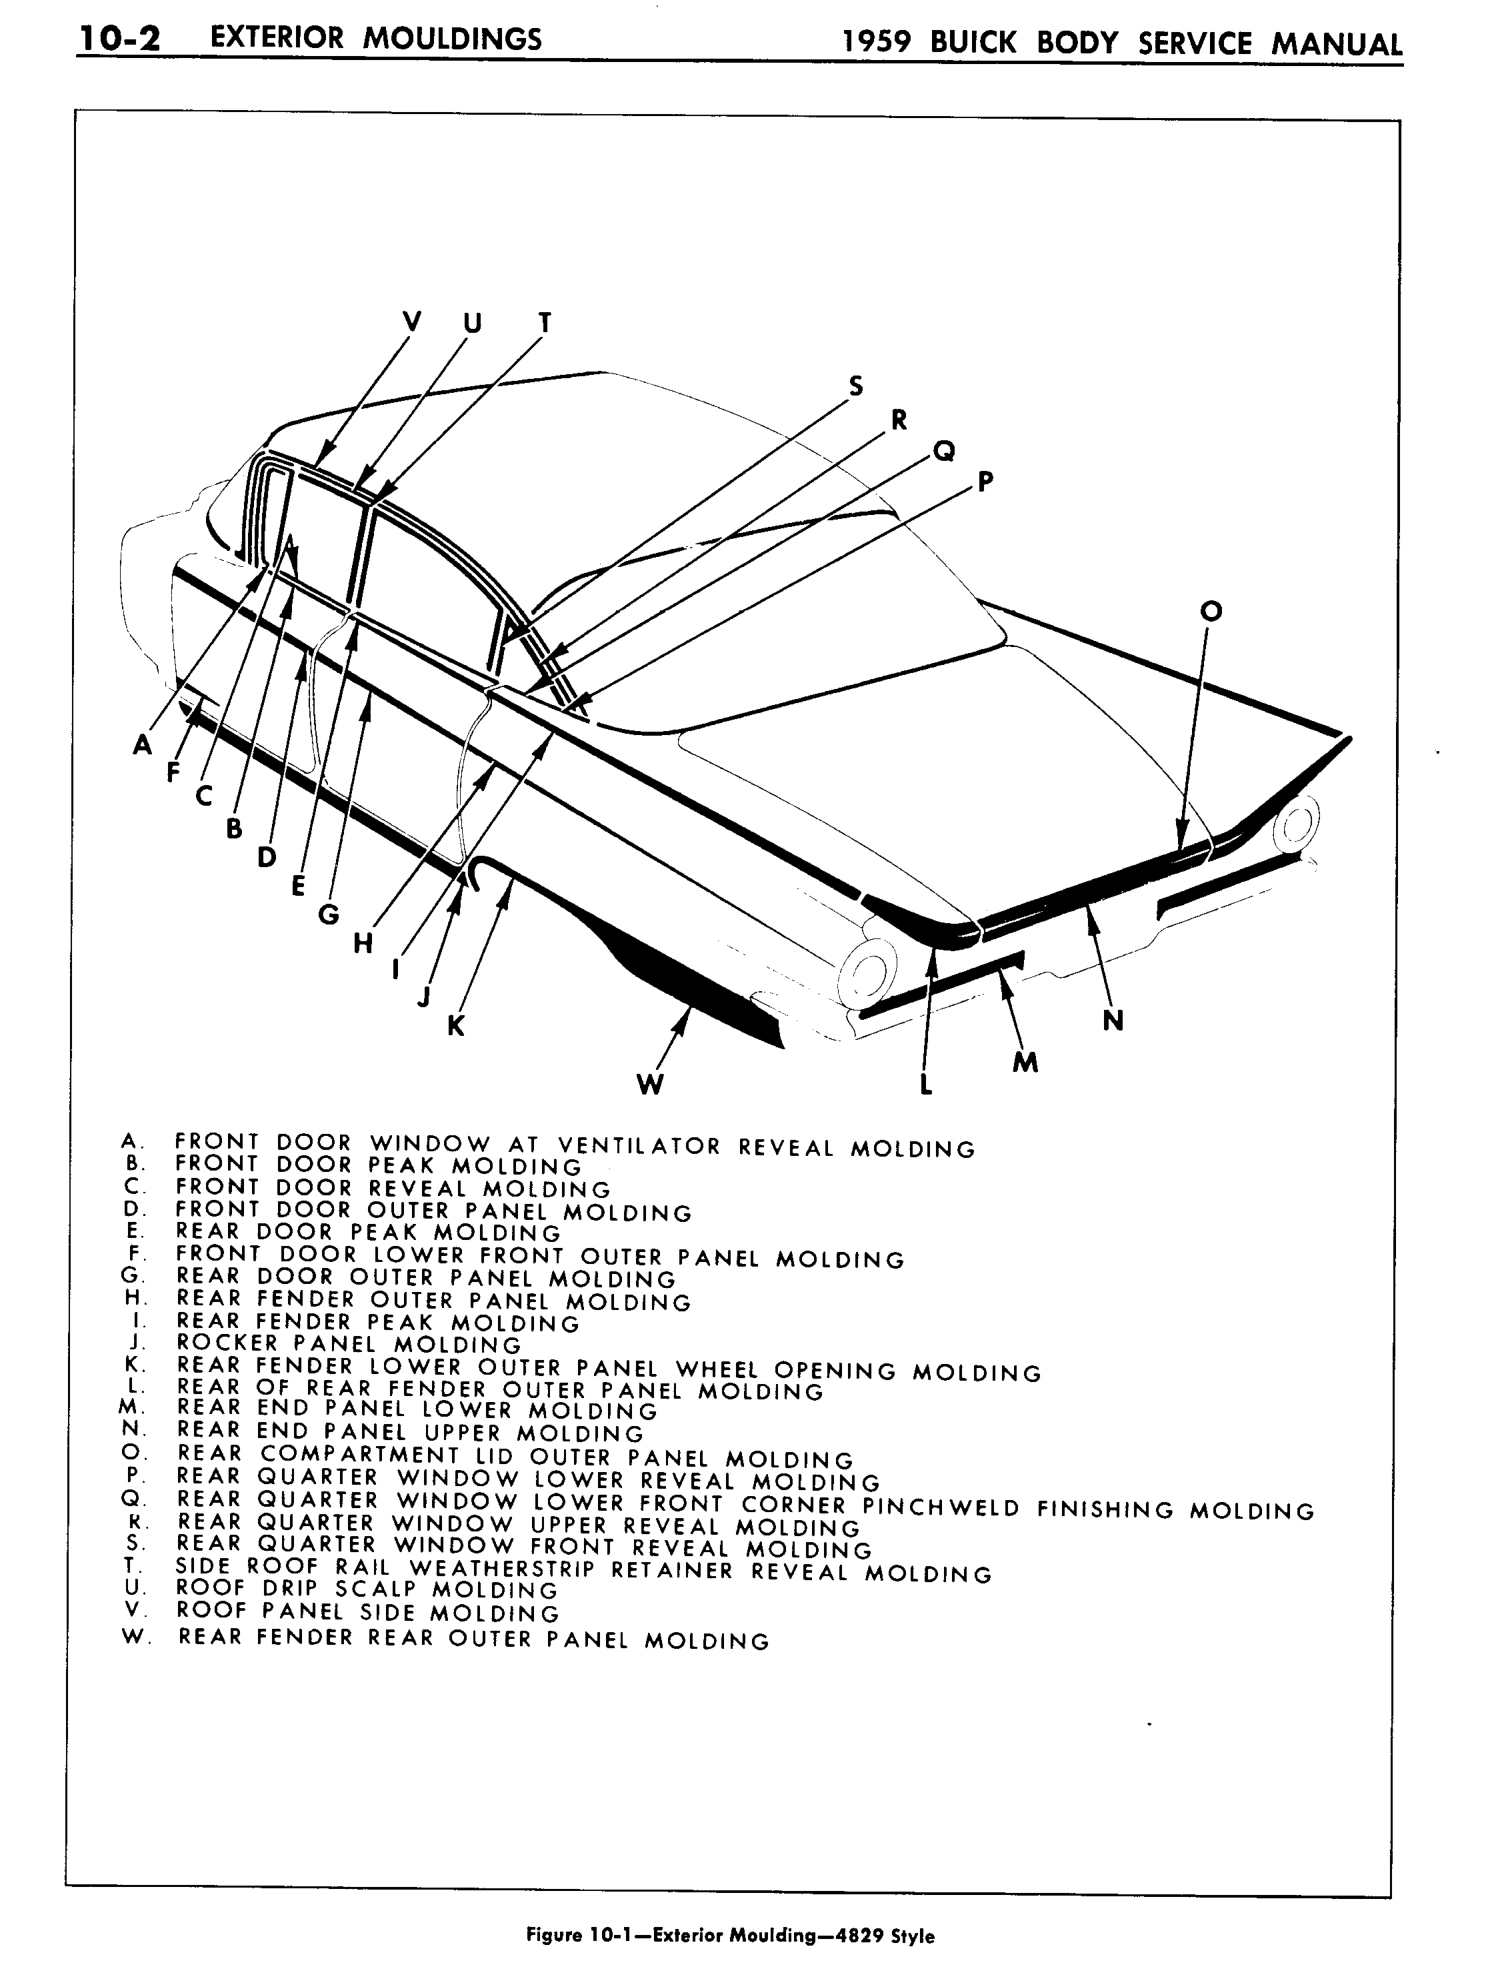 n_11 1959 Buick Body Service-Exterior Moldings_2.jpg